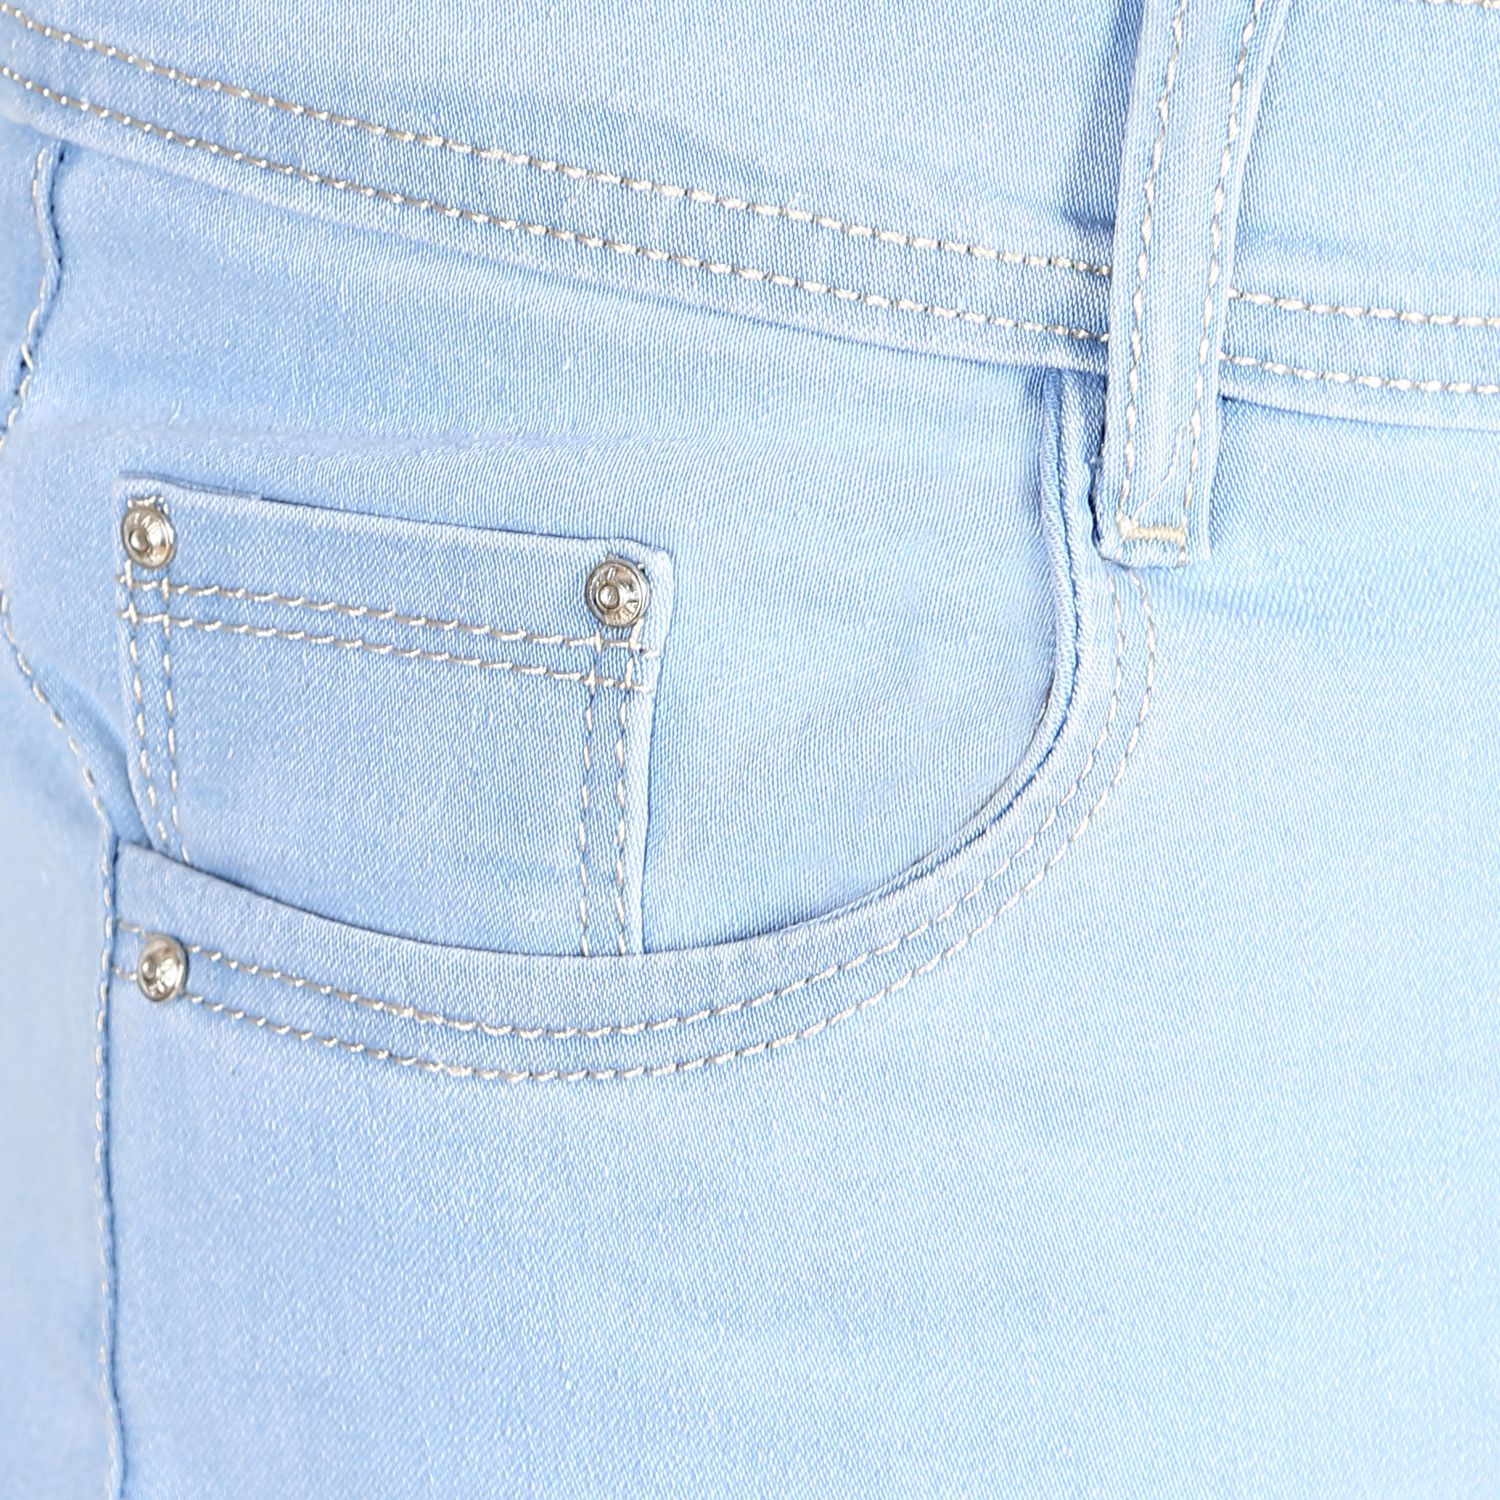 Akaira Blue Regular Fit Jeans - Buy Akaira Blue Regular Fit Jeans ...